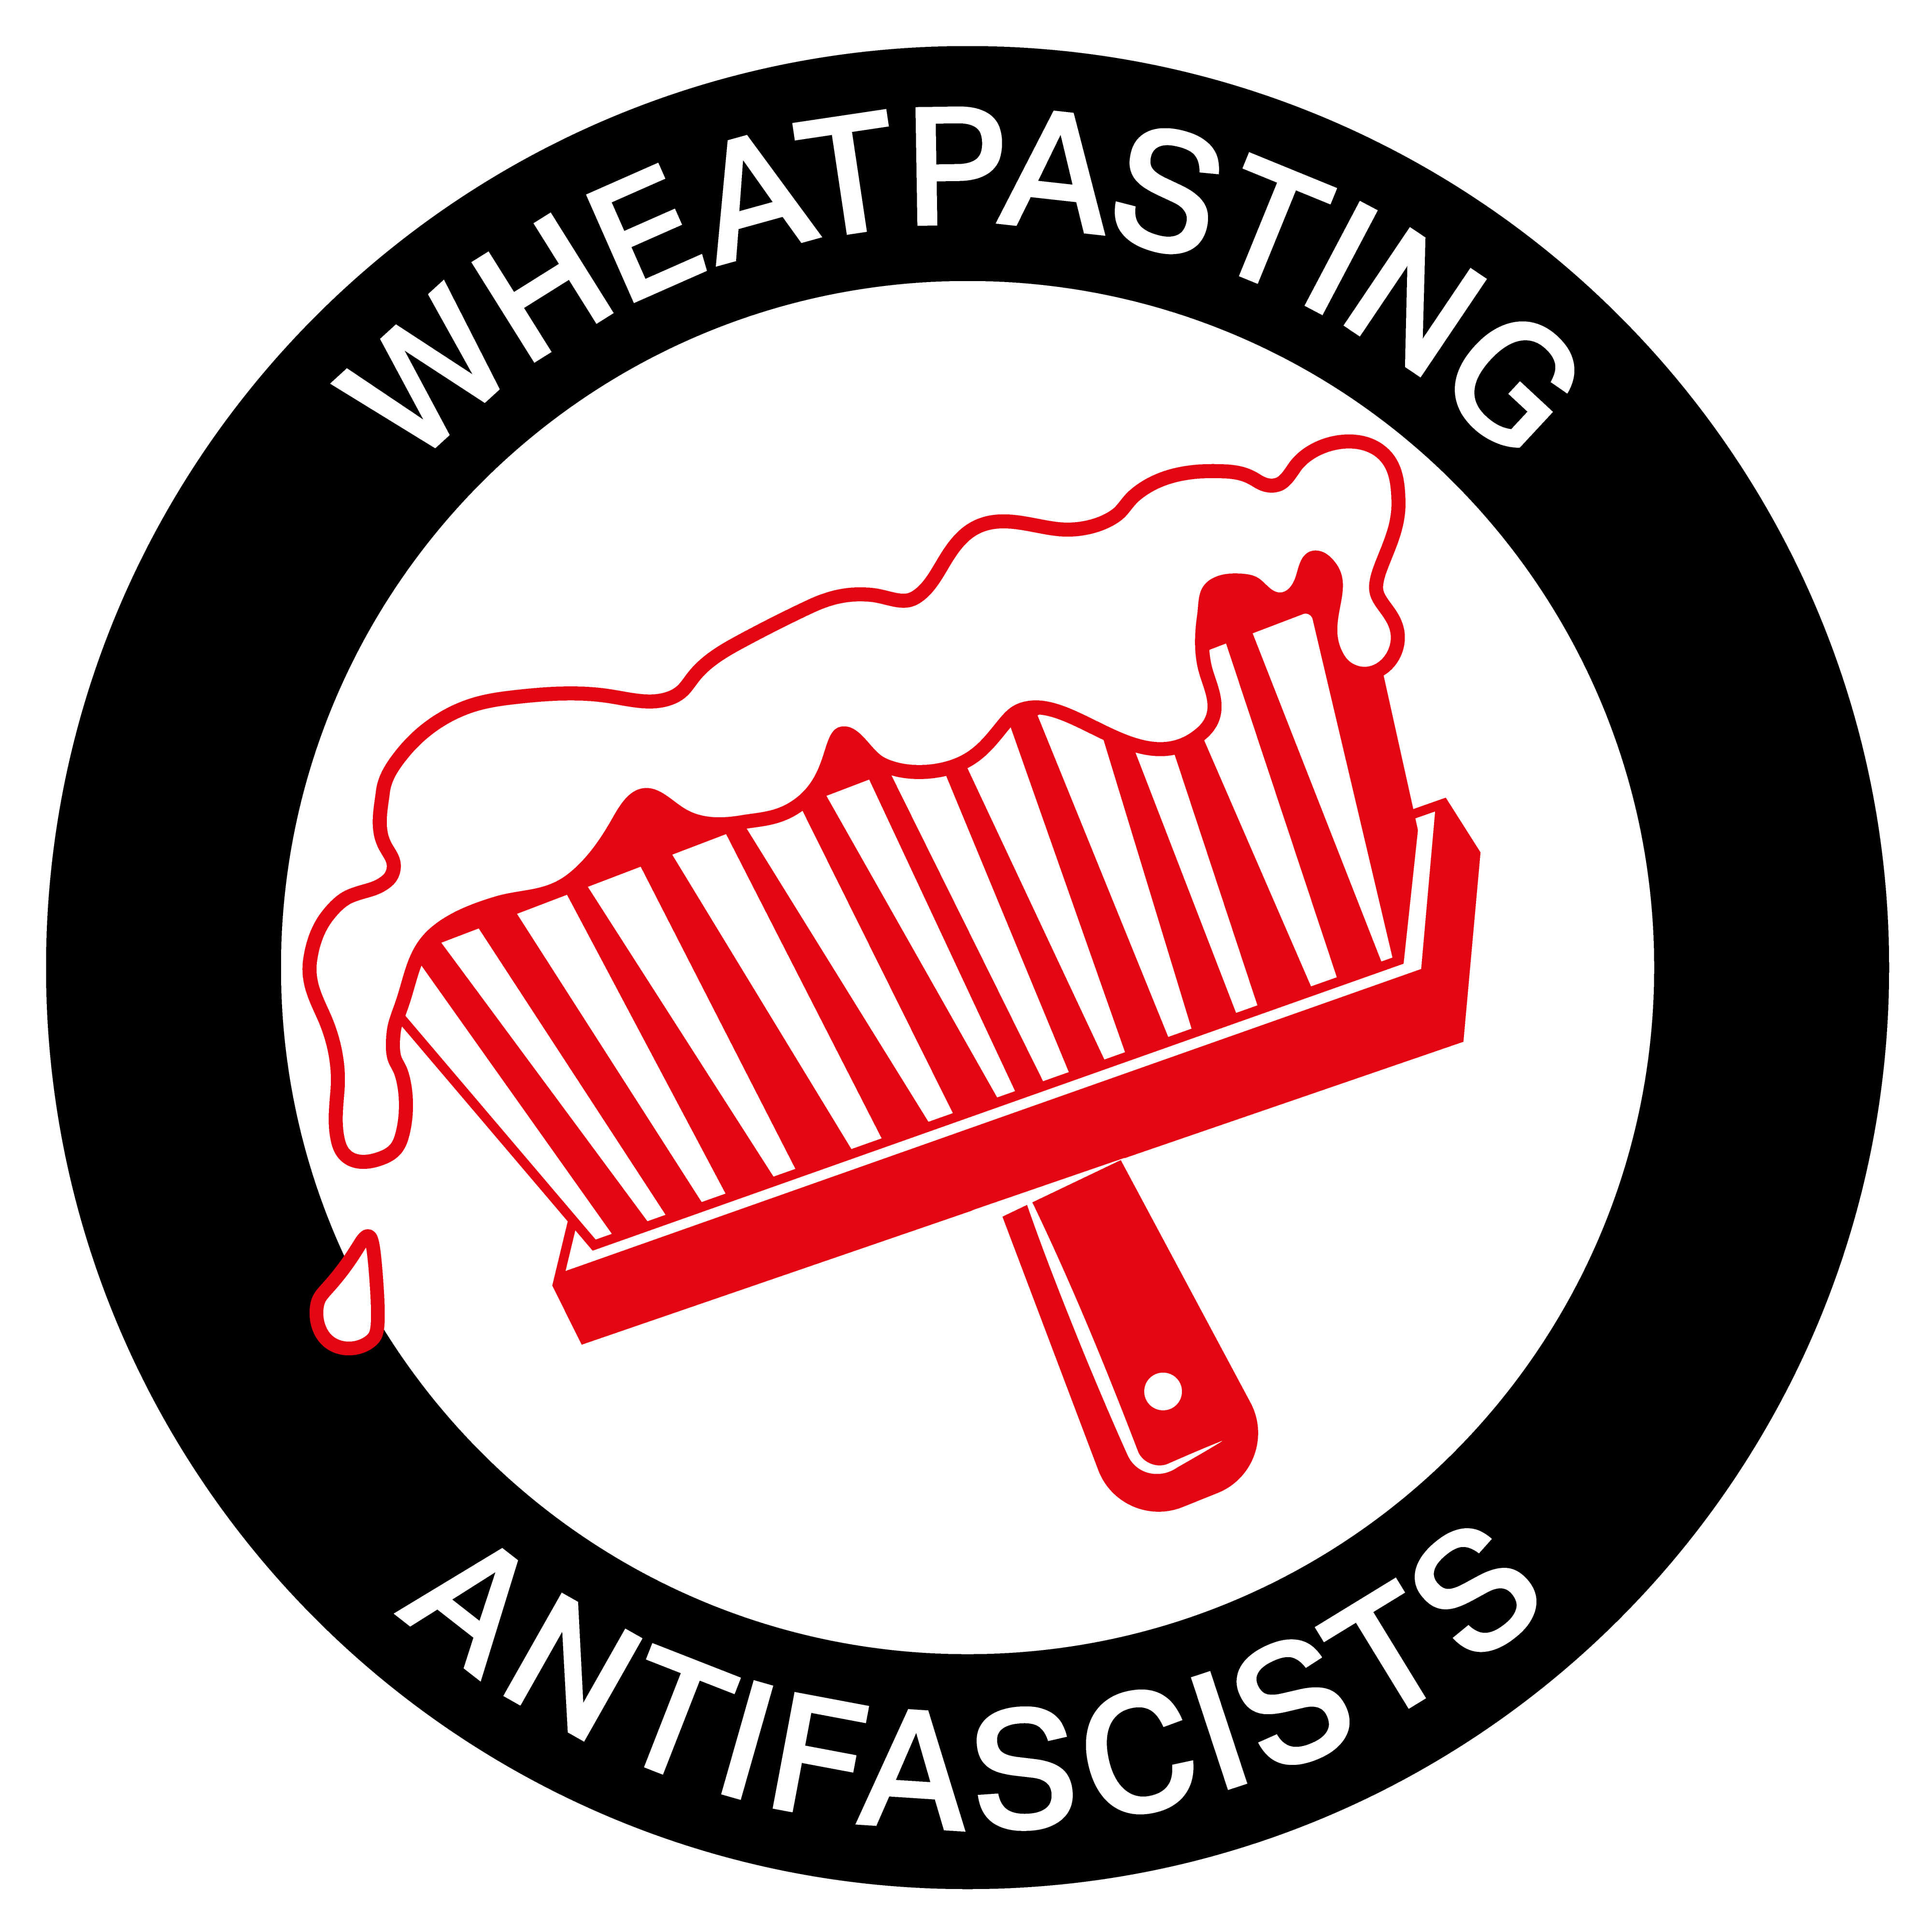 Wheatpasting Antifascists red